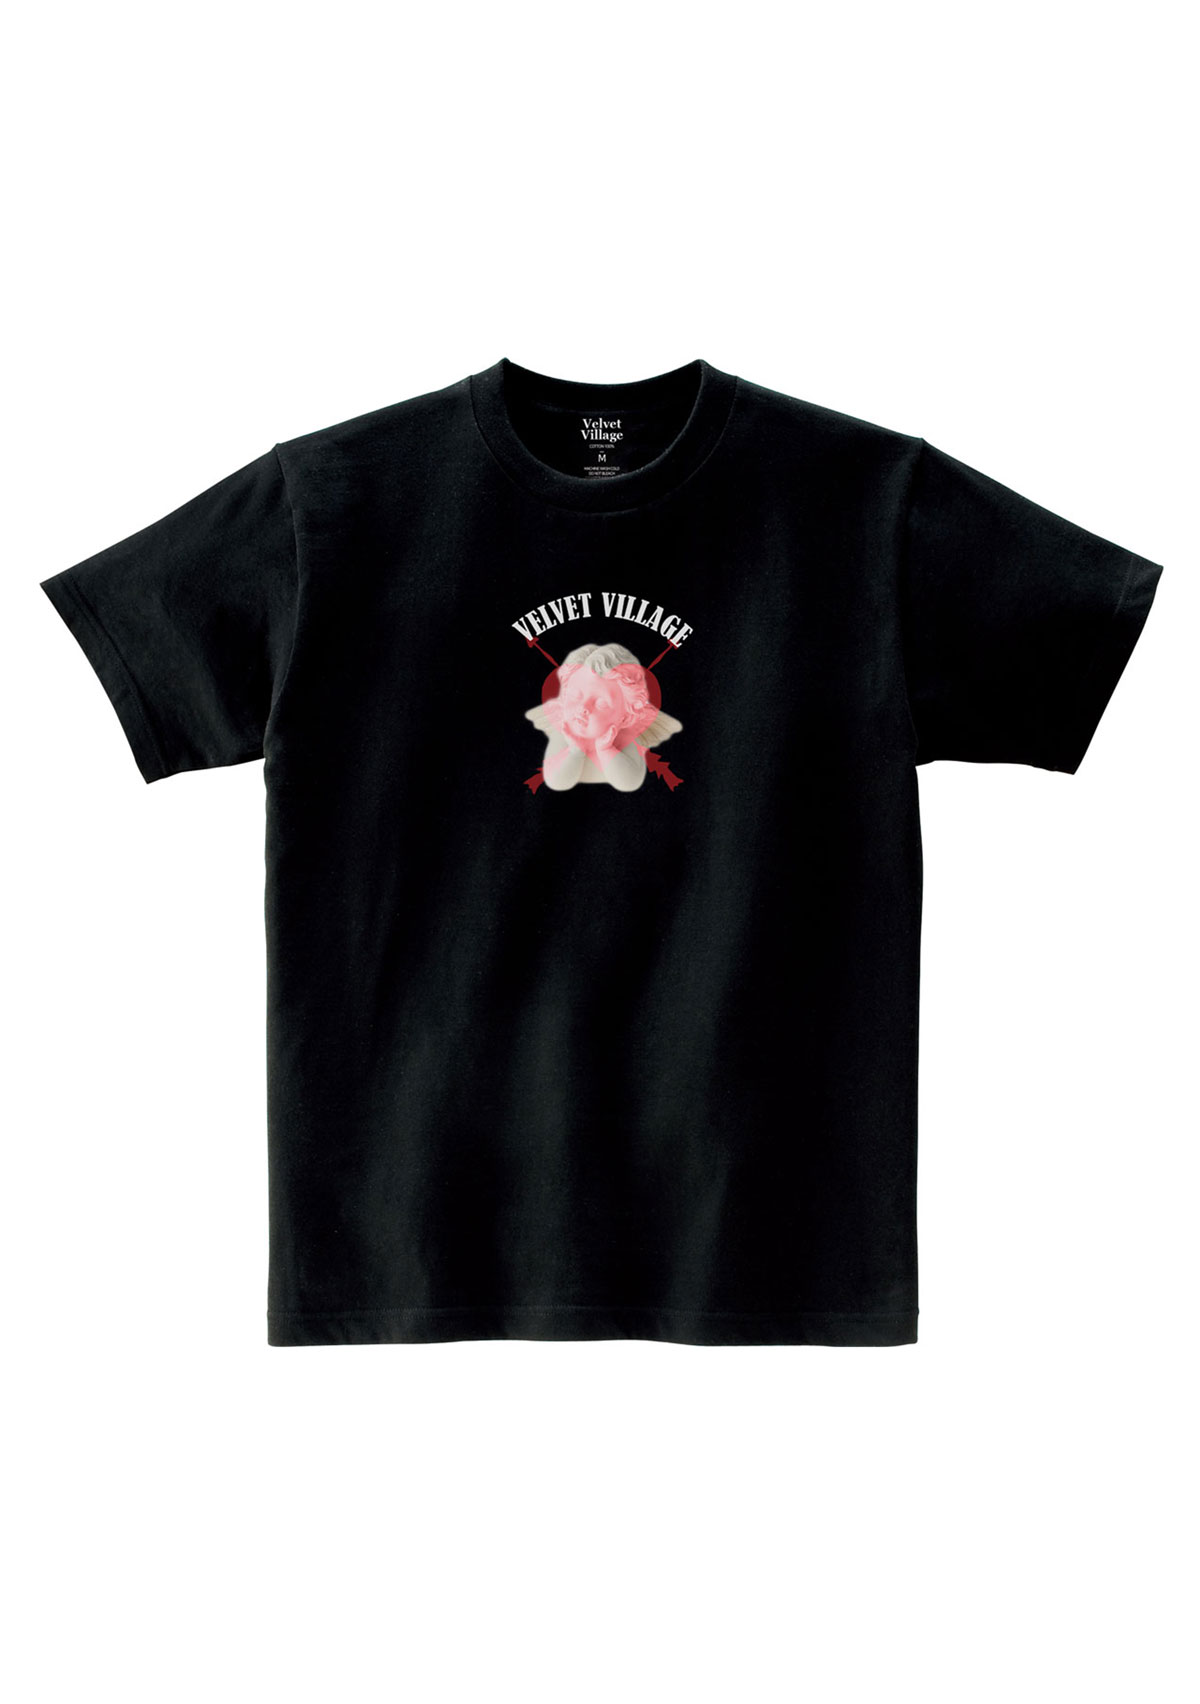 Angel T-shirt (Black)